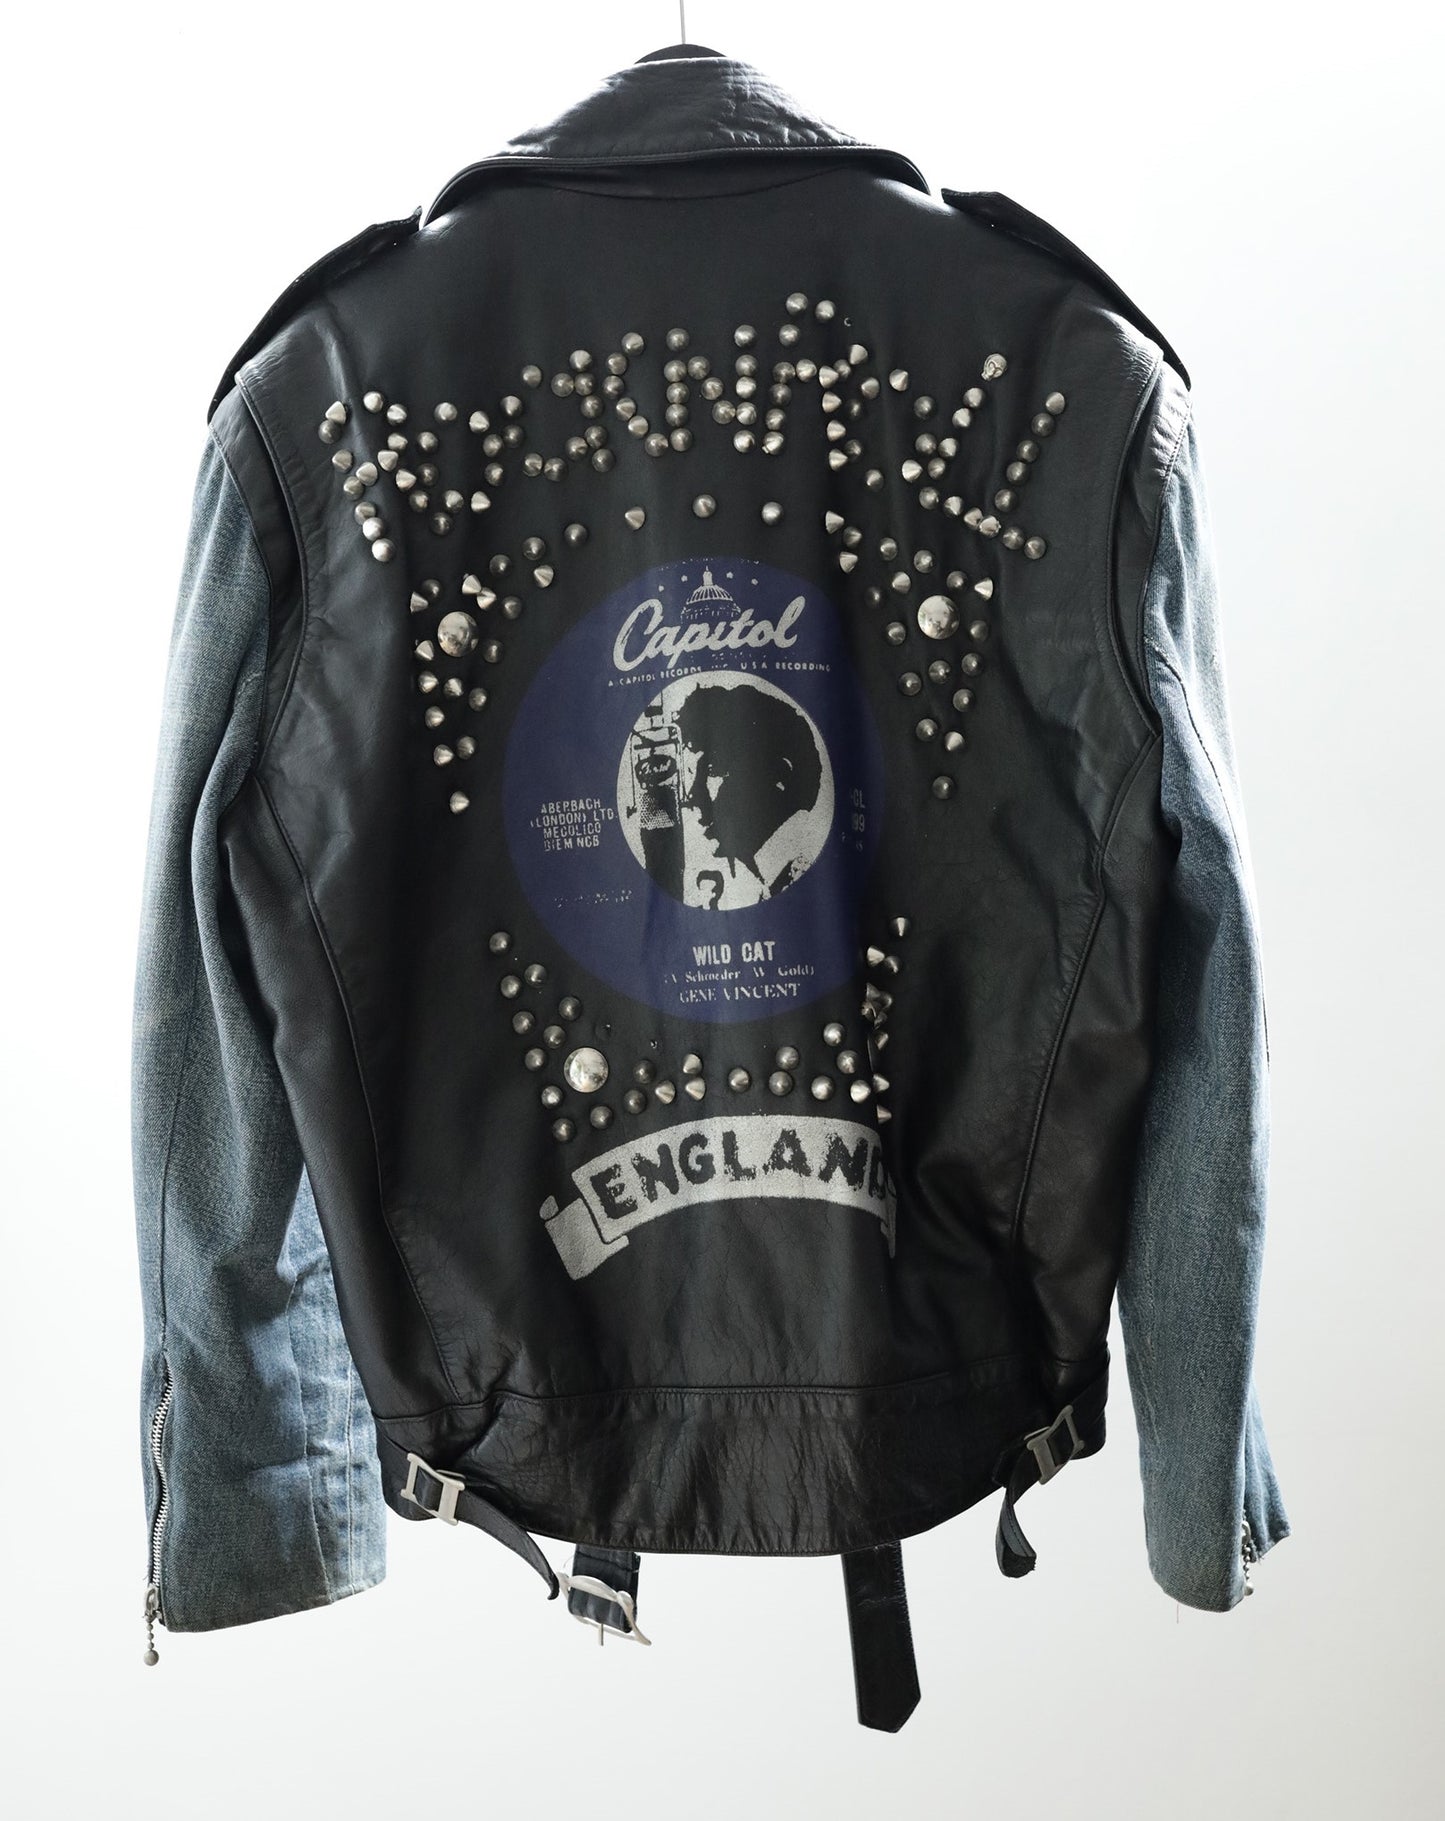 Original George Michael La Rocka Jacket (worn)